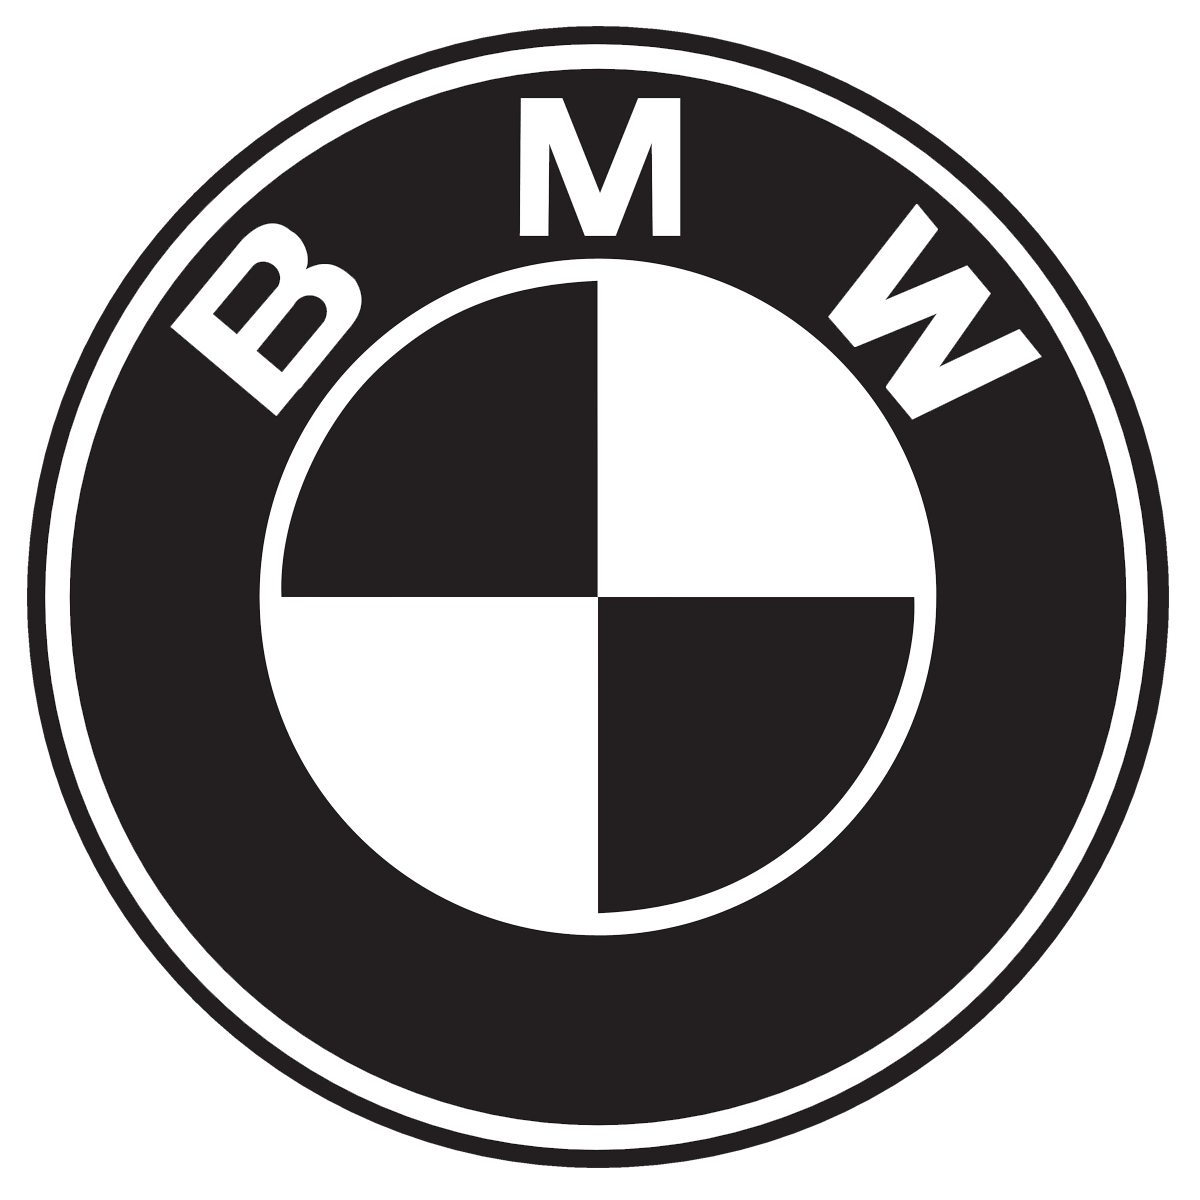 m3 logo black and white